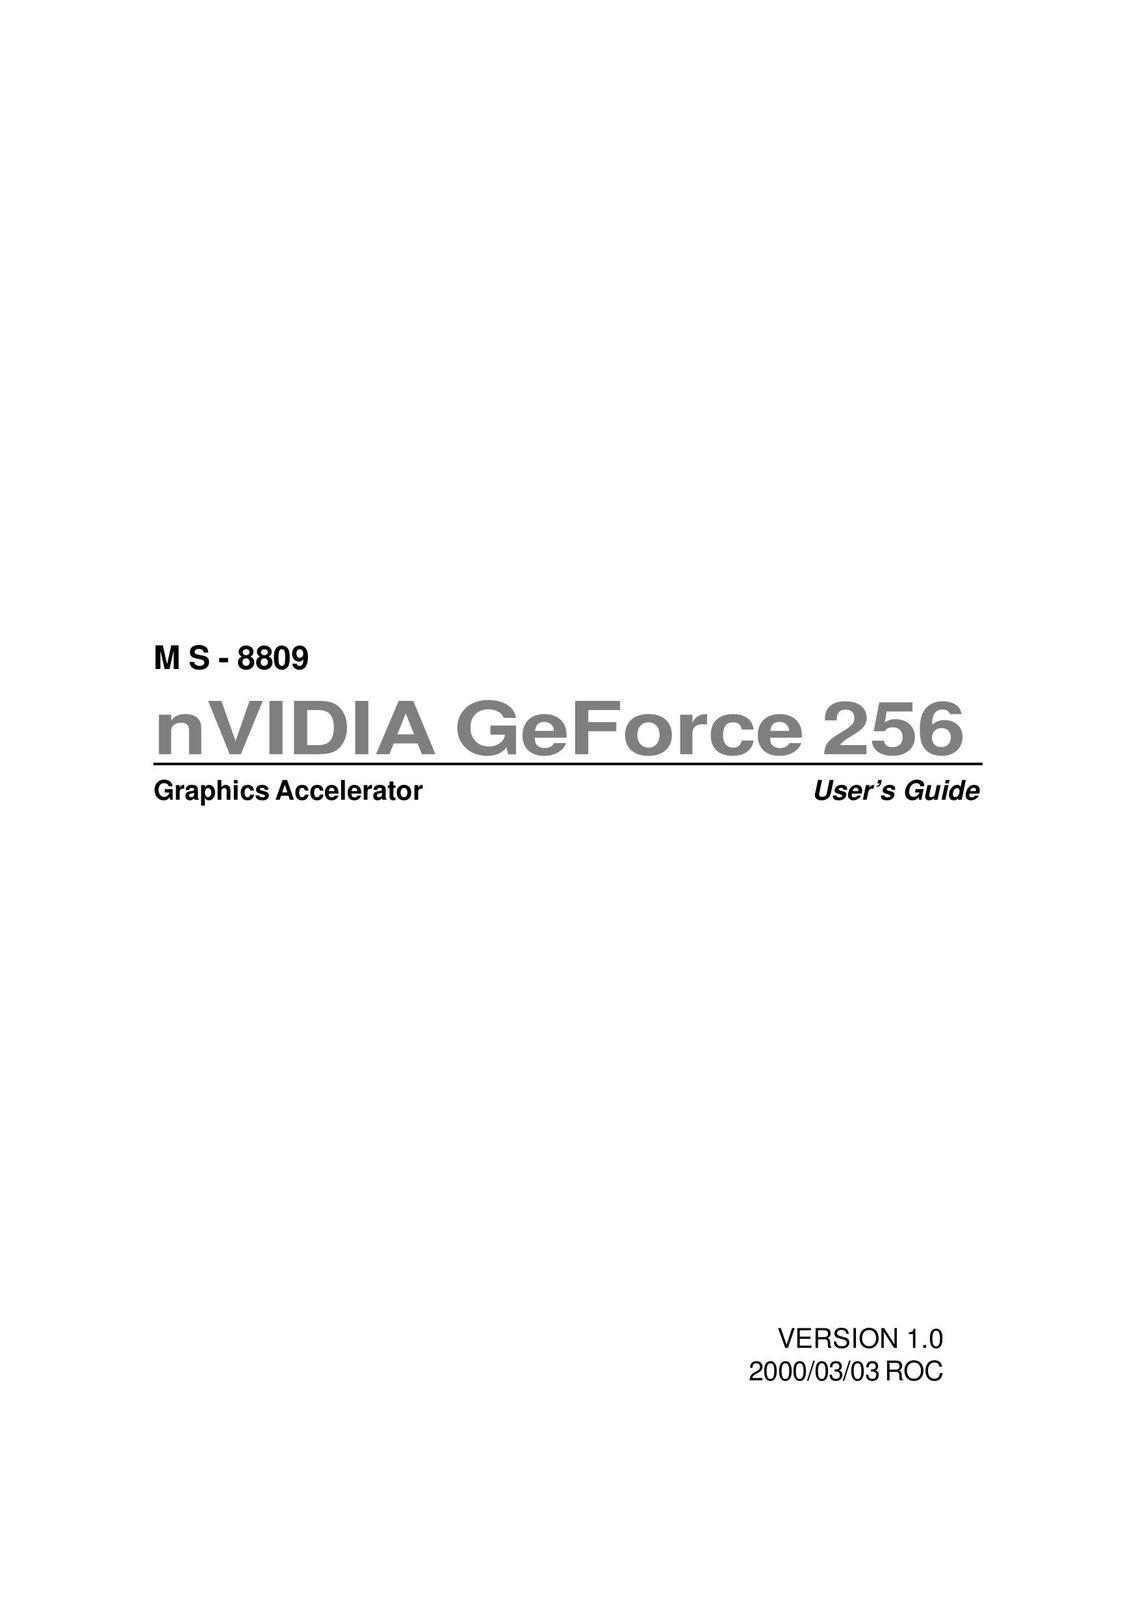 Nvidia VERSION 1.0 2000/03/03 ROC Computer Hardware User Manual